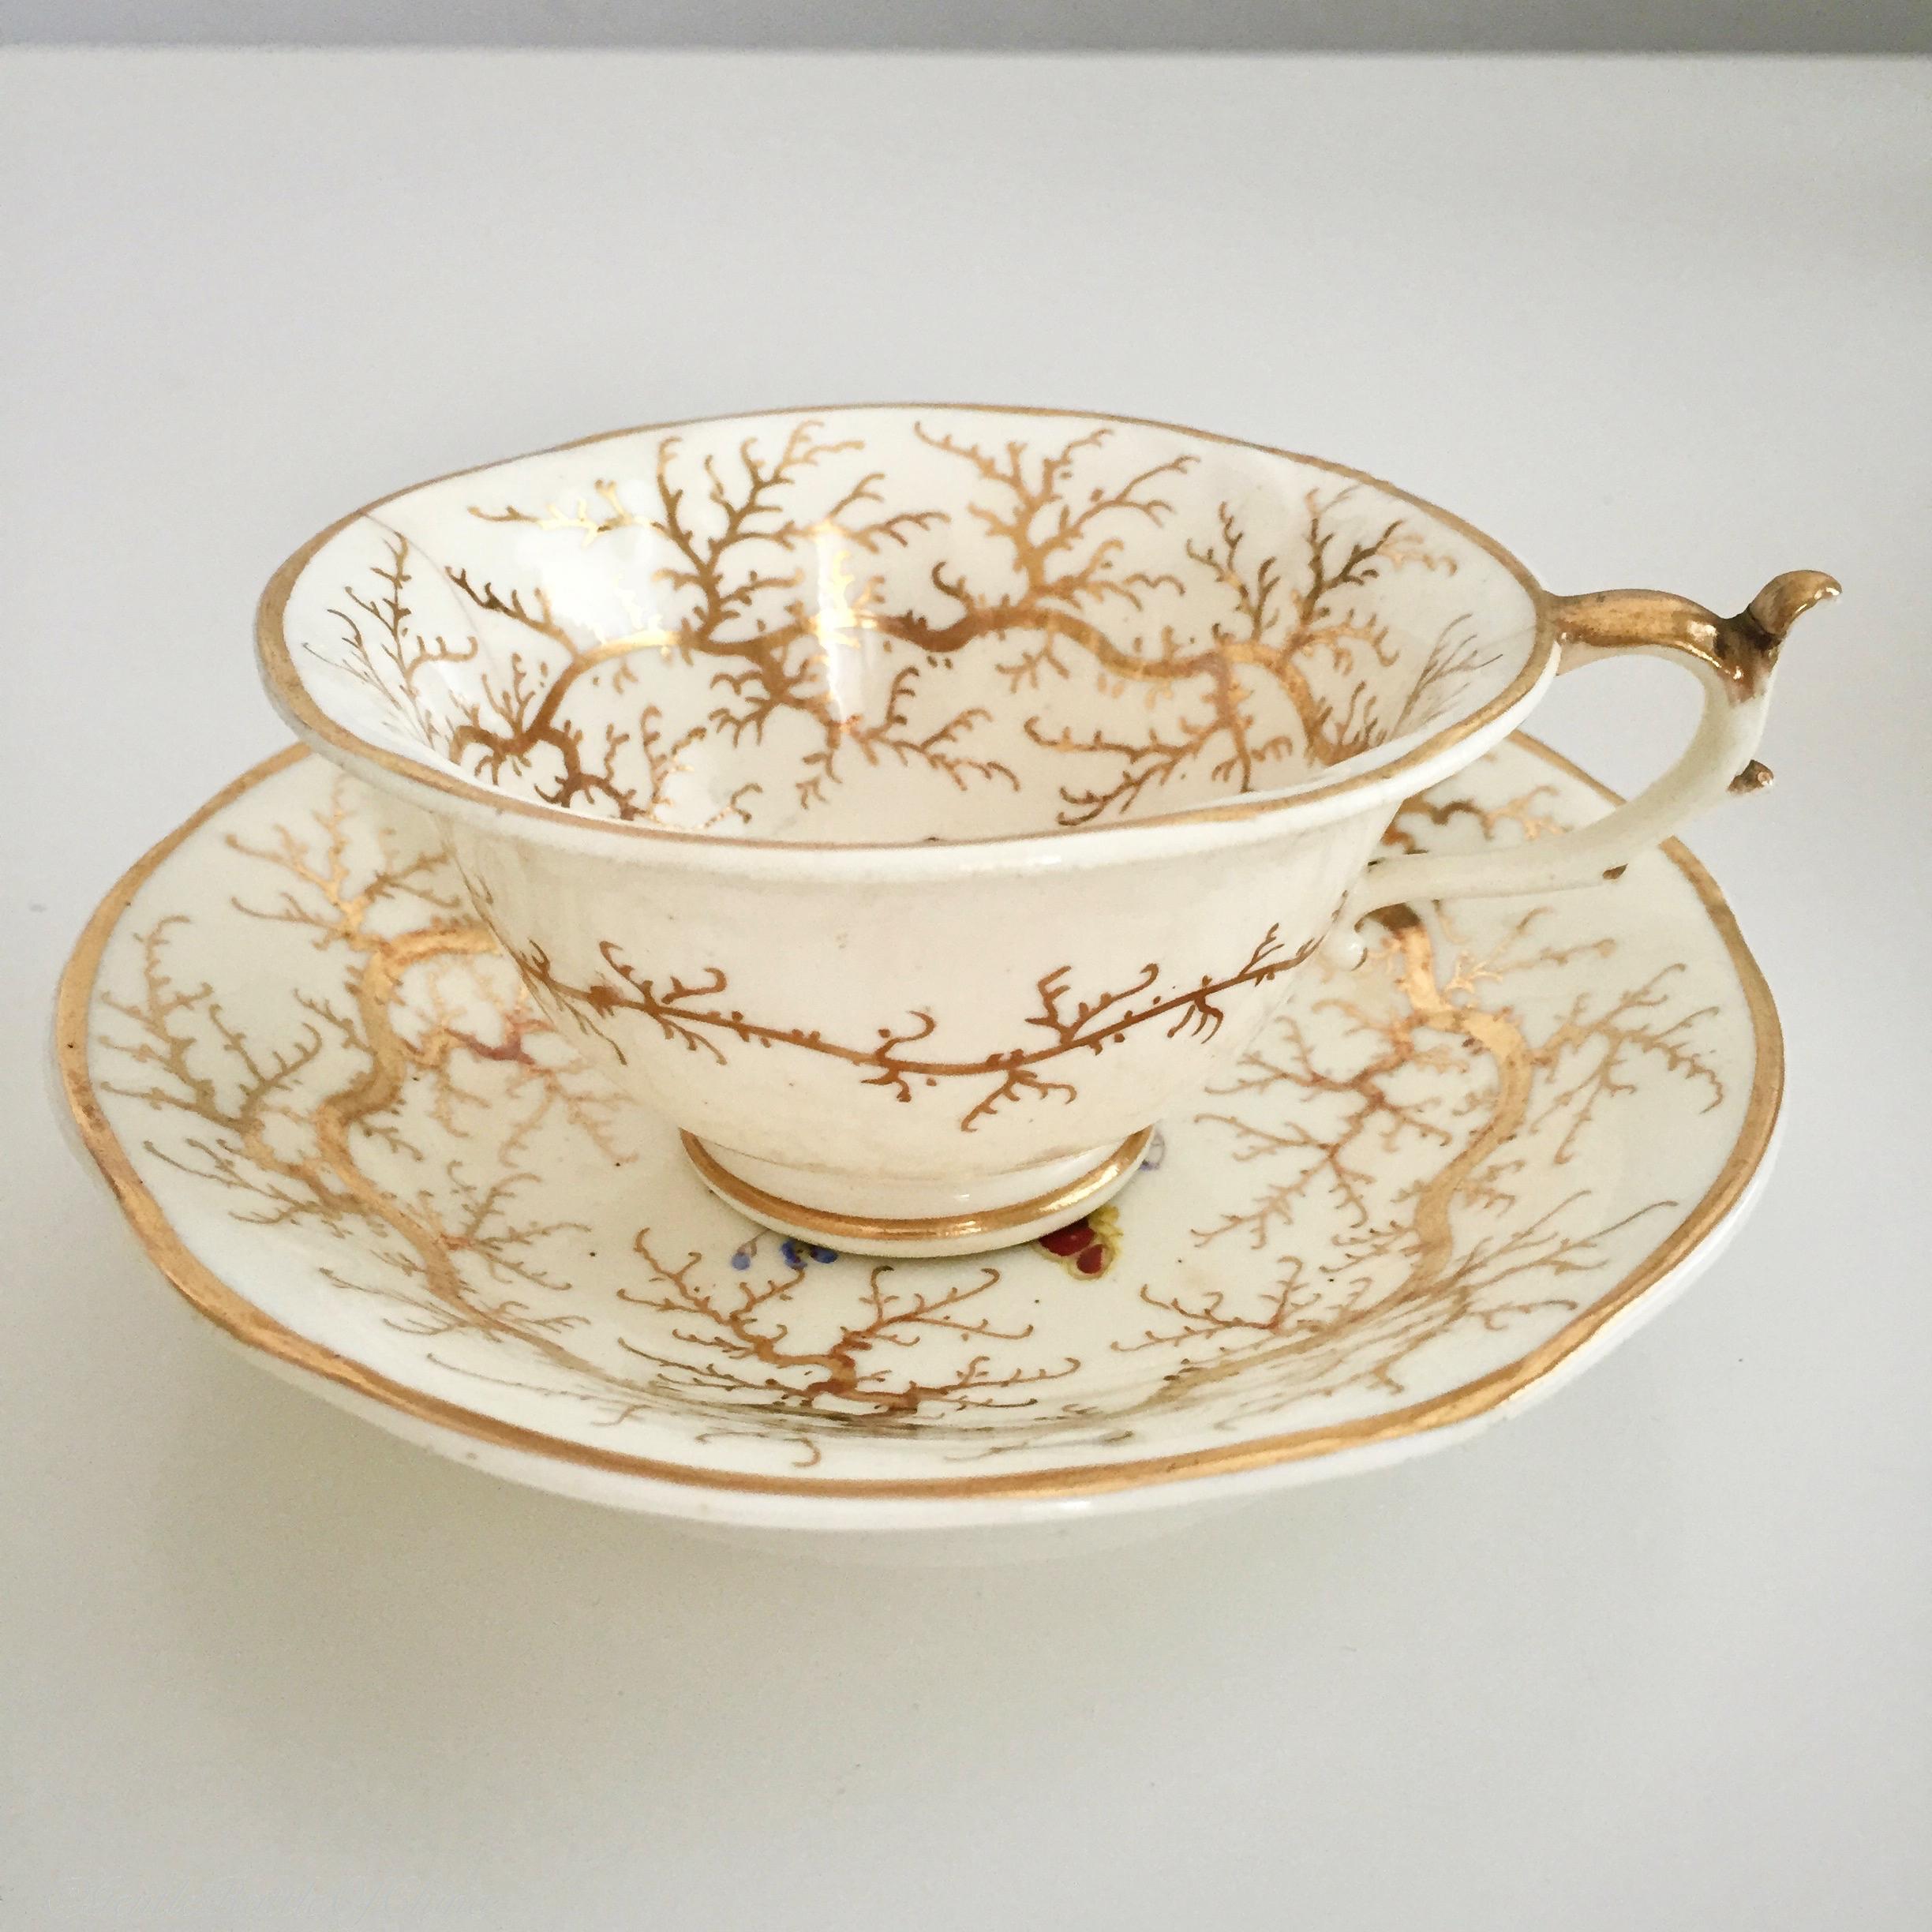 Hand-Painted Rockingham Porcelain Tea Service, Cream, Gilt and Flowers, Rococo Revival, 1832